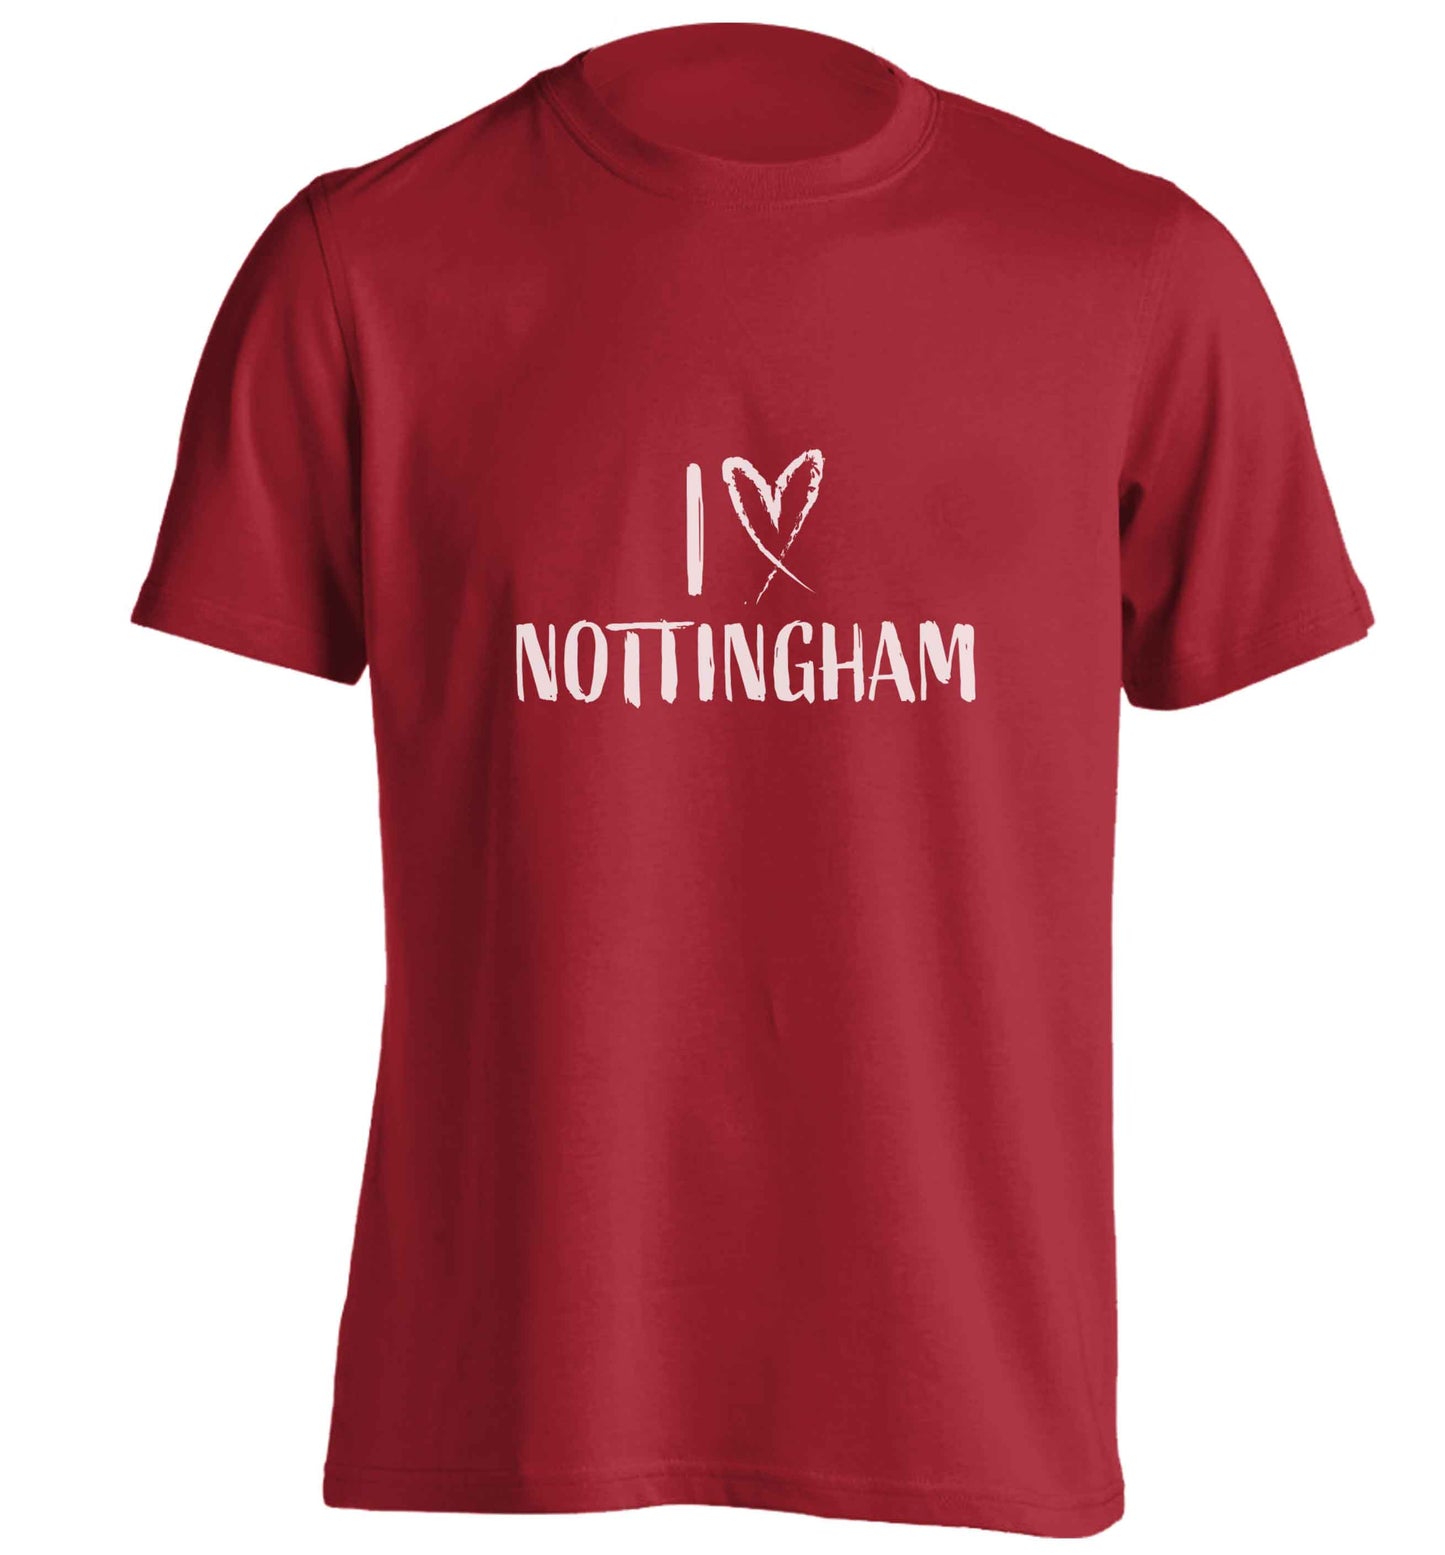 I love Nottingham adults unisex red Tshirt 2XL